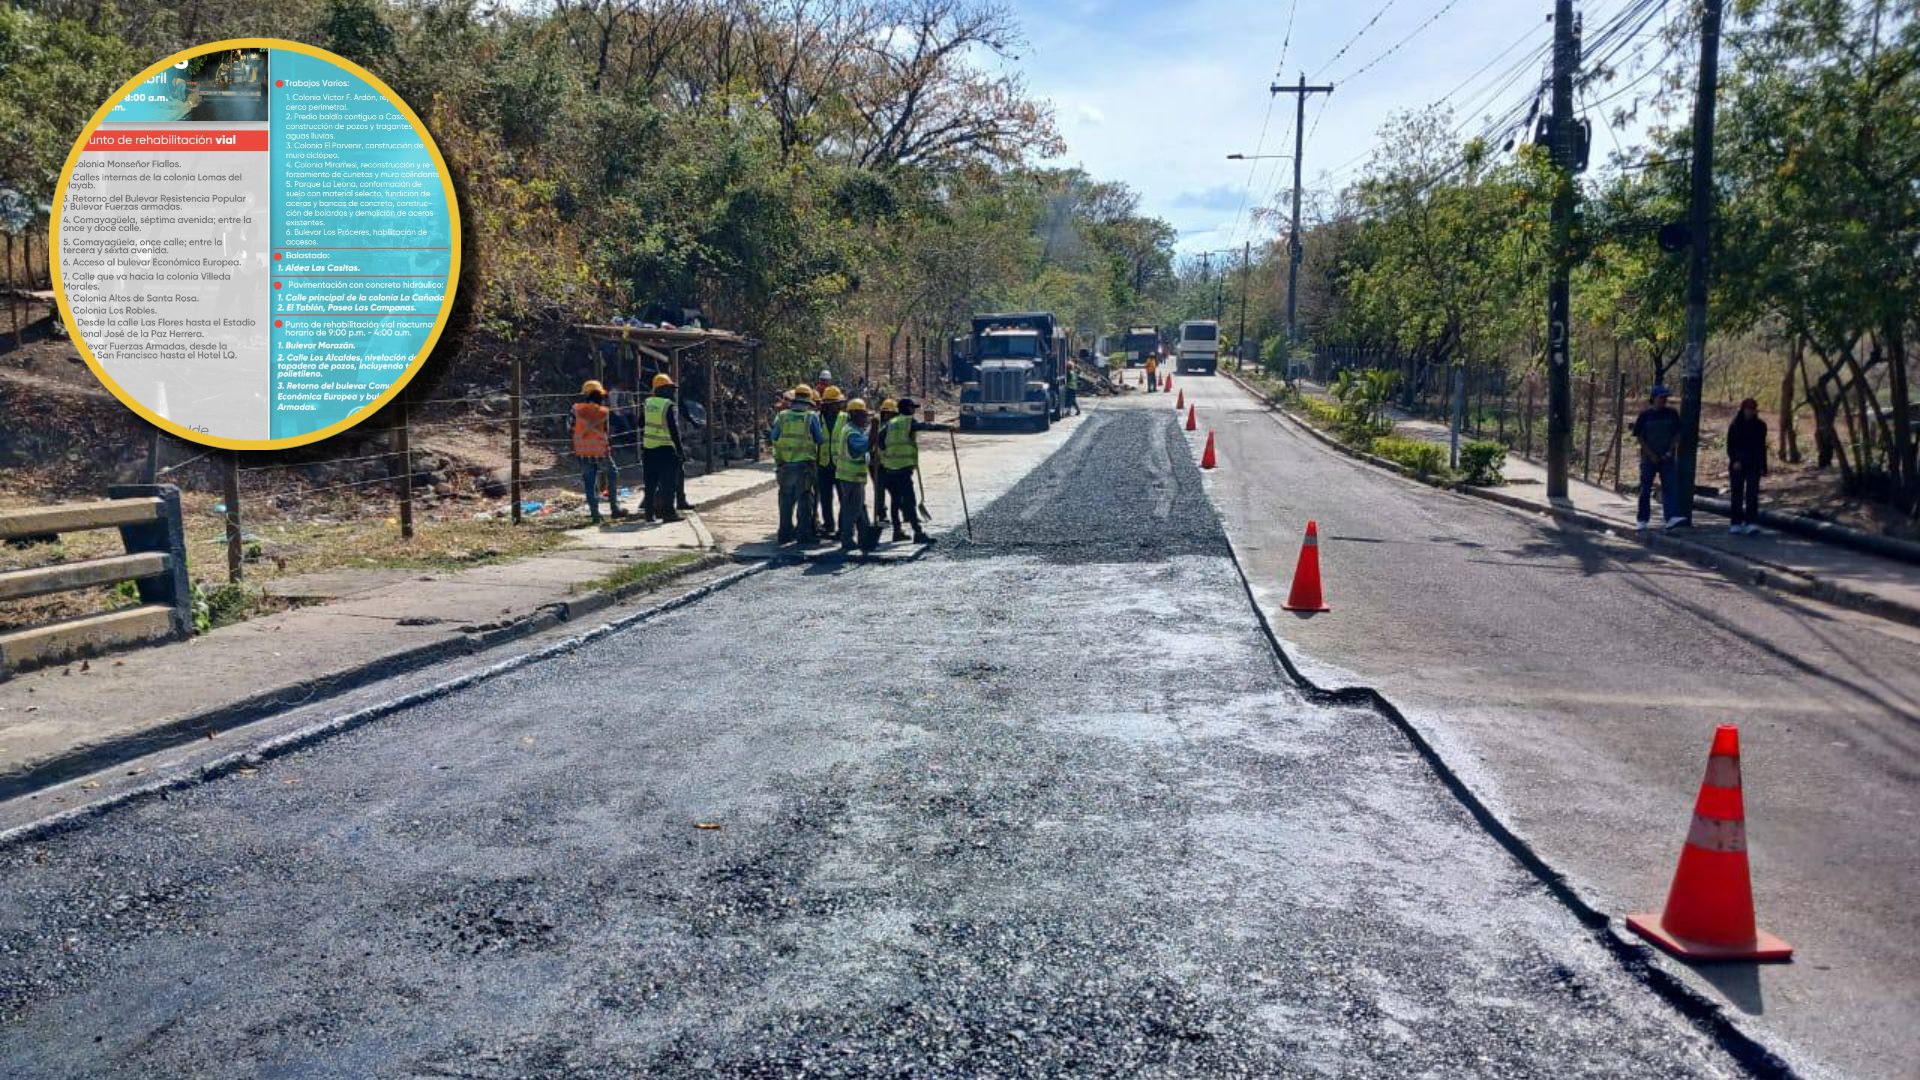 Tome rutas alternas AMDC anuncia calles en reparación para este lunes 15 de abril